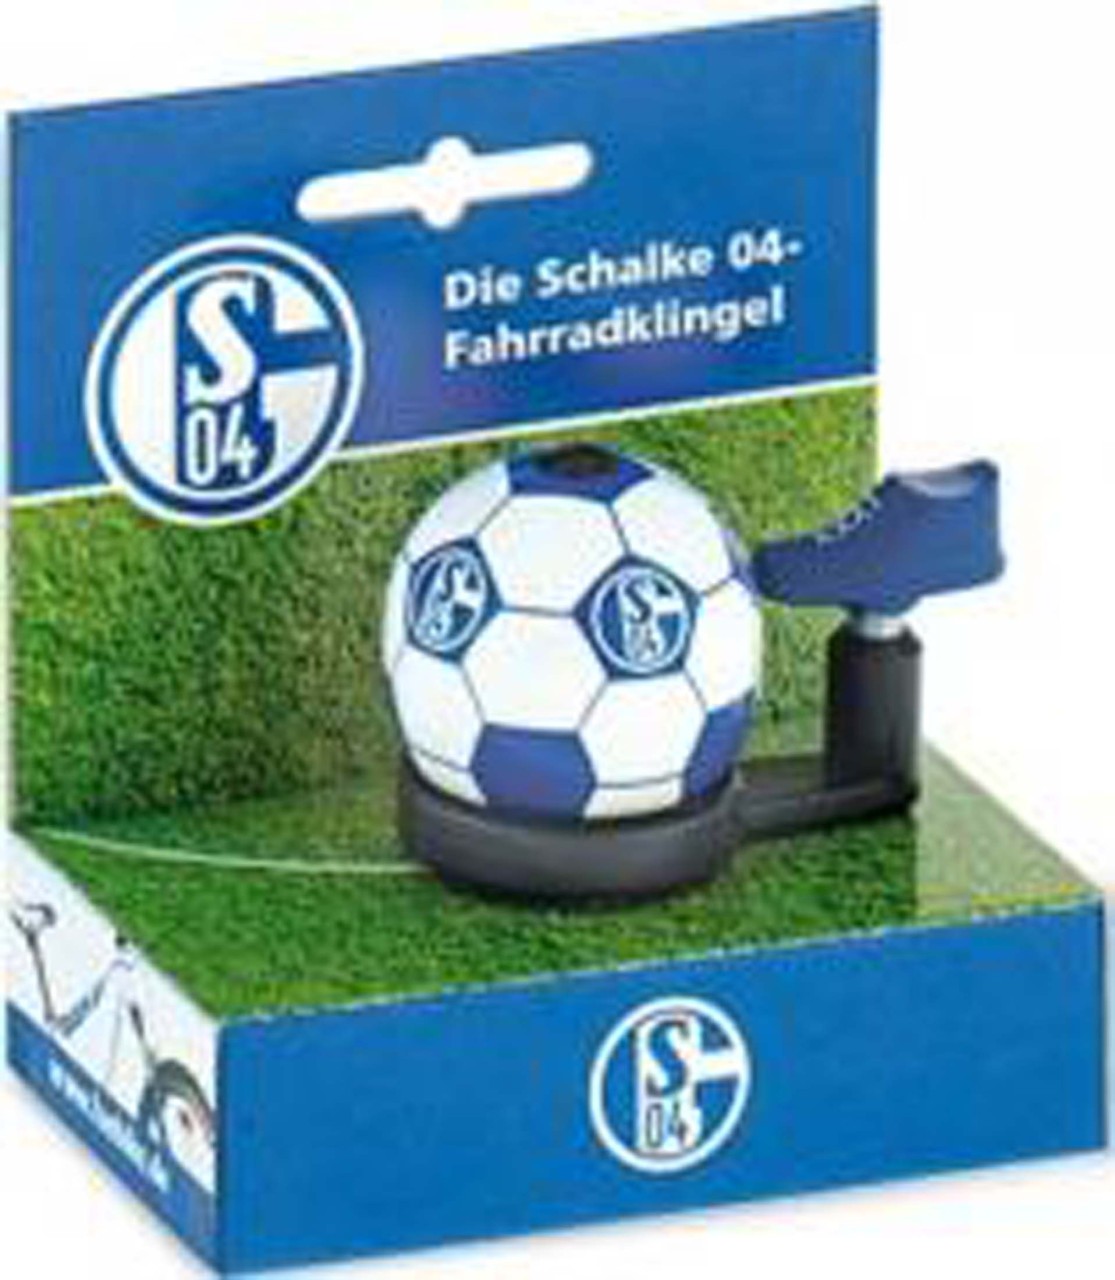 Football bell Bundesliga Schalke04